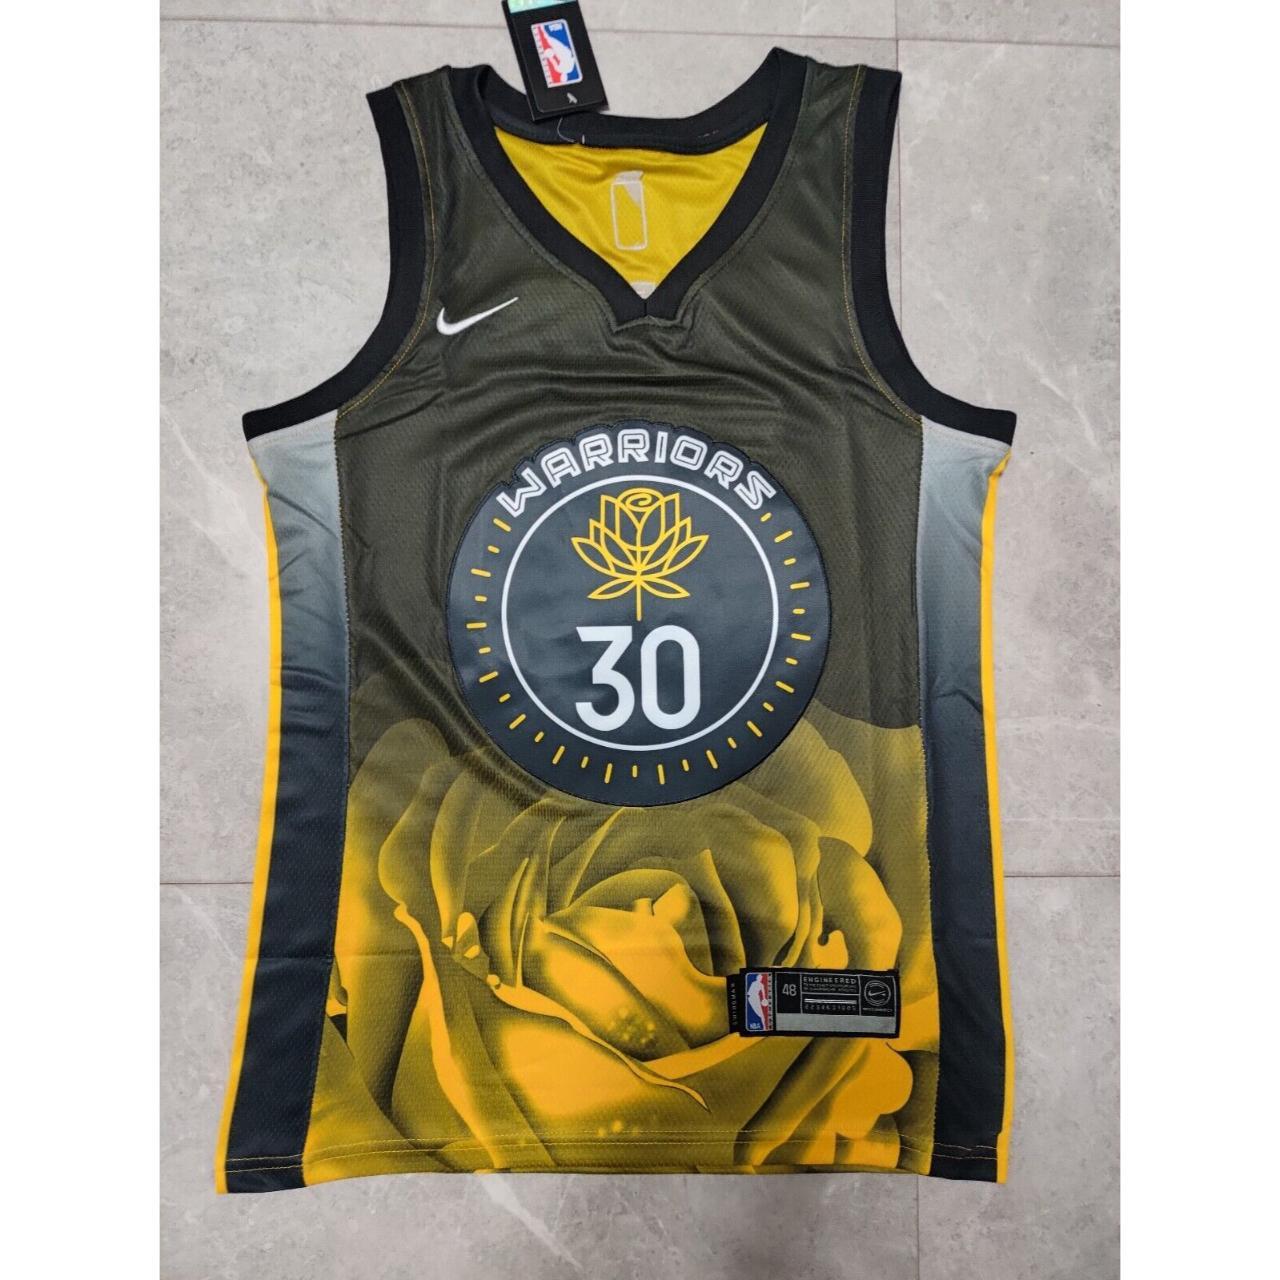 Nike Dri-FIT NBA Warriors Steph Curry City Edition - Depop